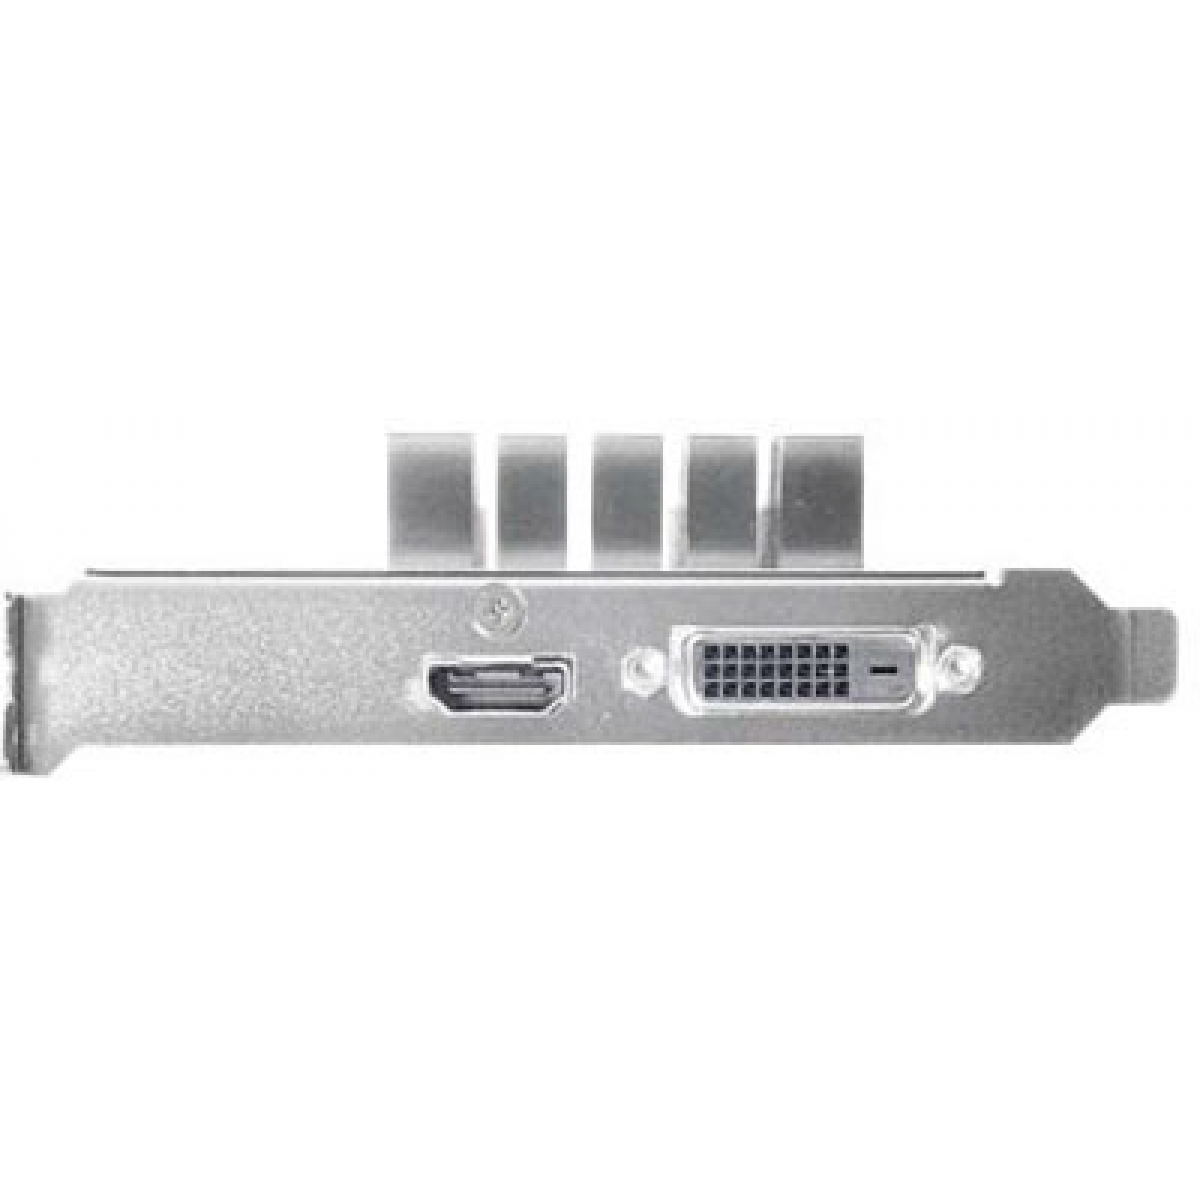 Placa de Vídeo Asus, GeForce, GT 1030, 2GB, GDDR5, 64Bit, GT1030-2G-CSM